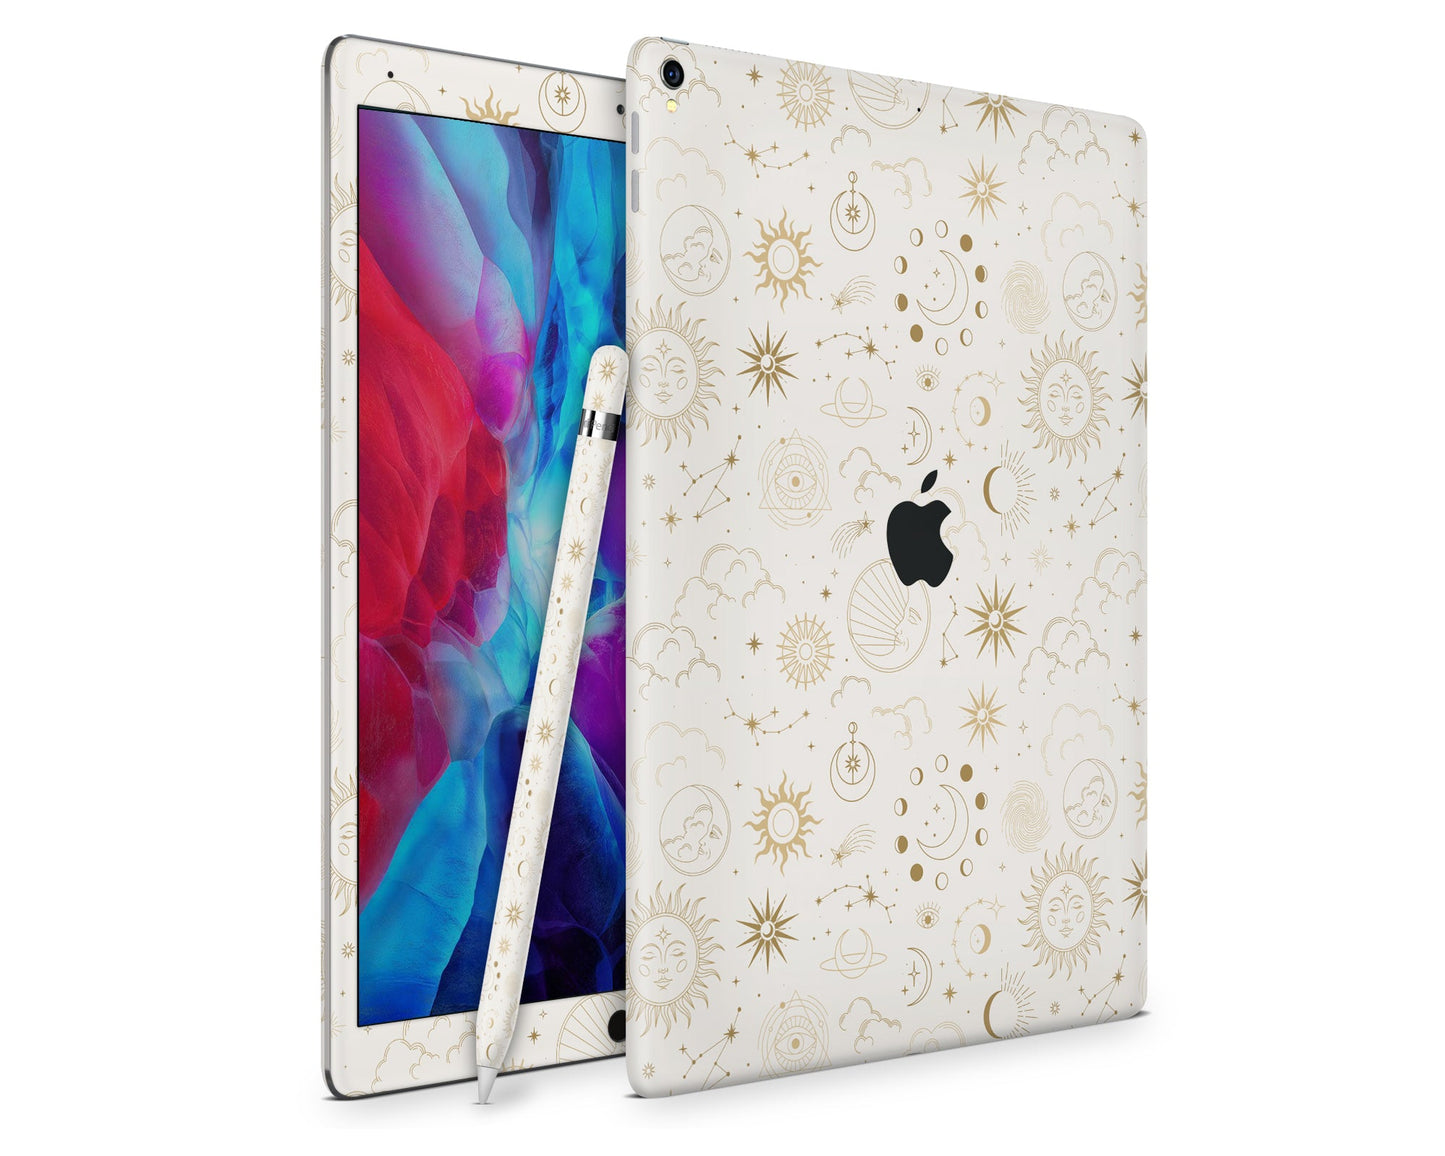 Lux Skins iPad Constellation Stargazing Day iPad Pro 12.9" Gen 5 Skins - Pattern Galaxy Skin